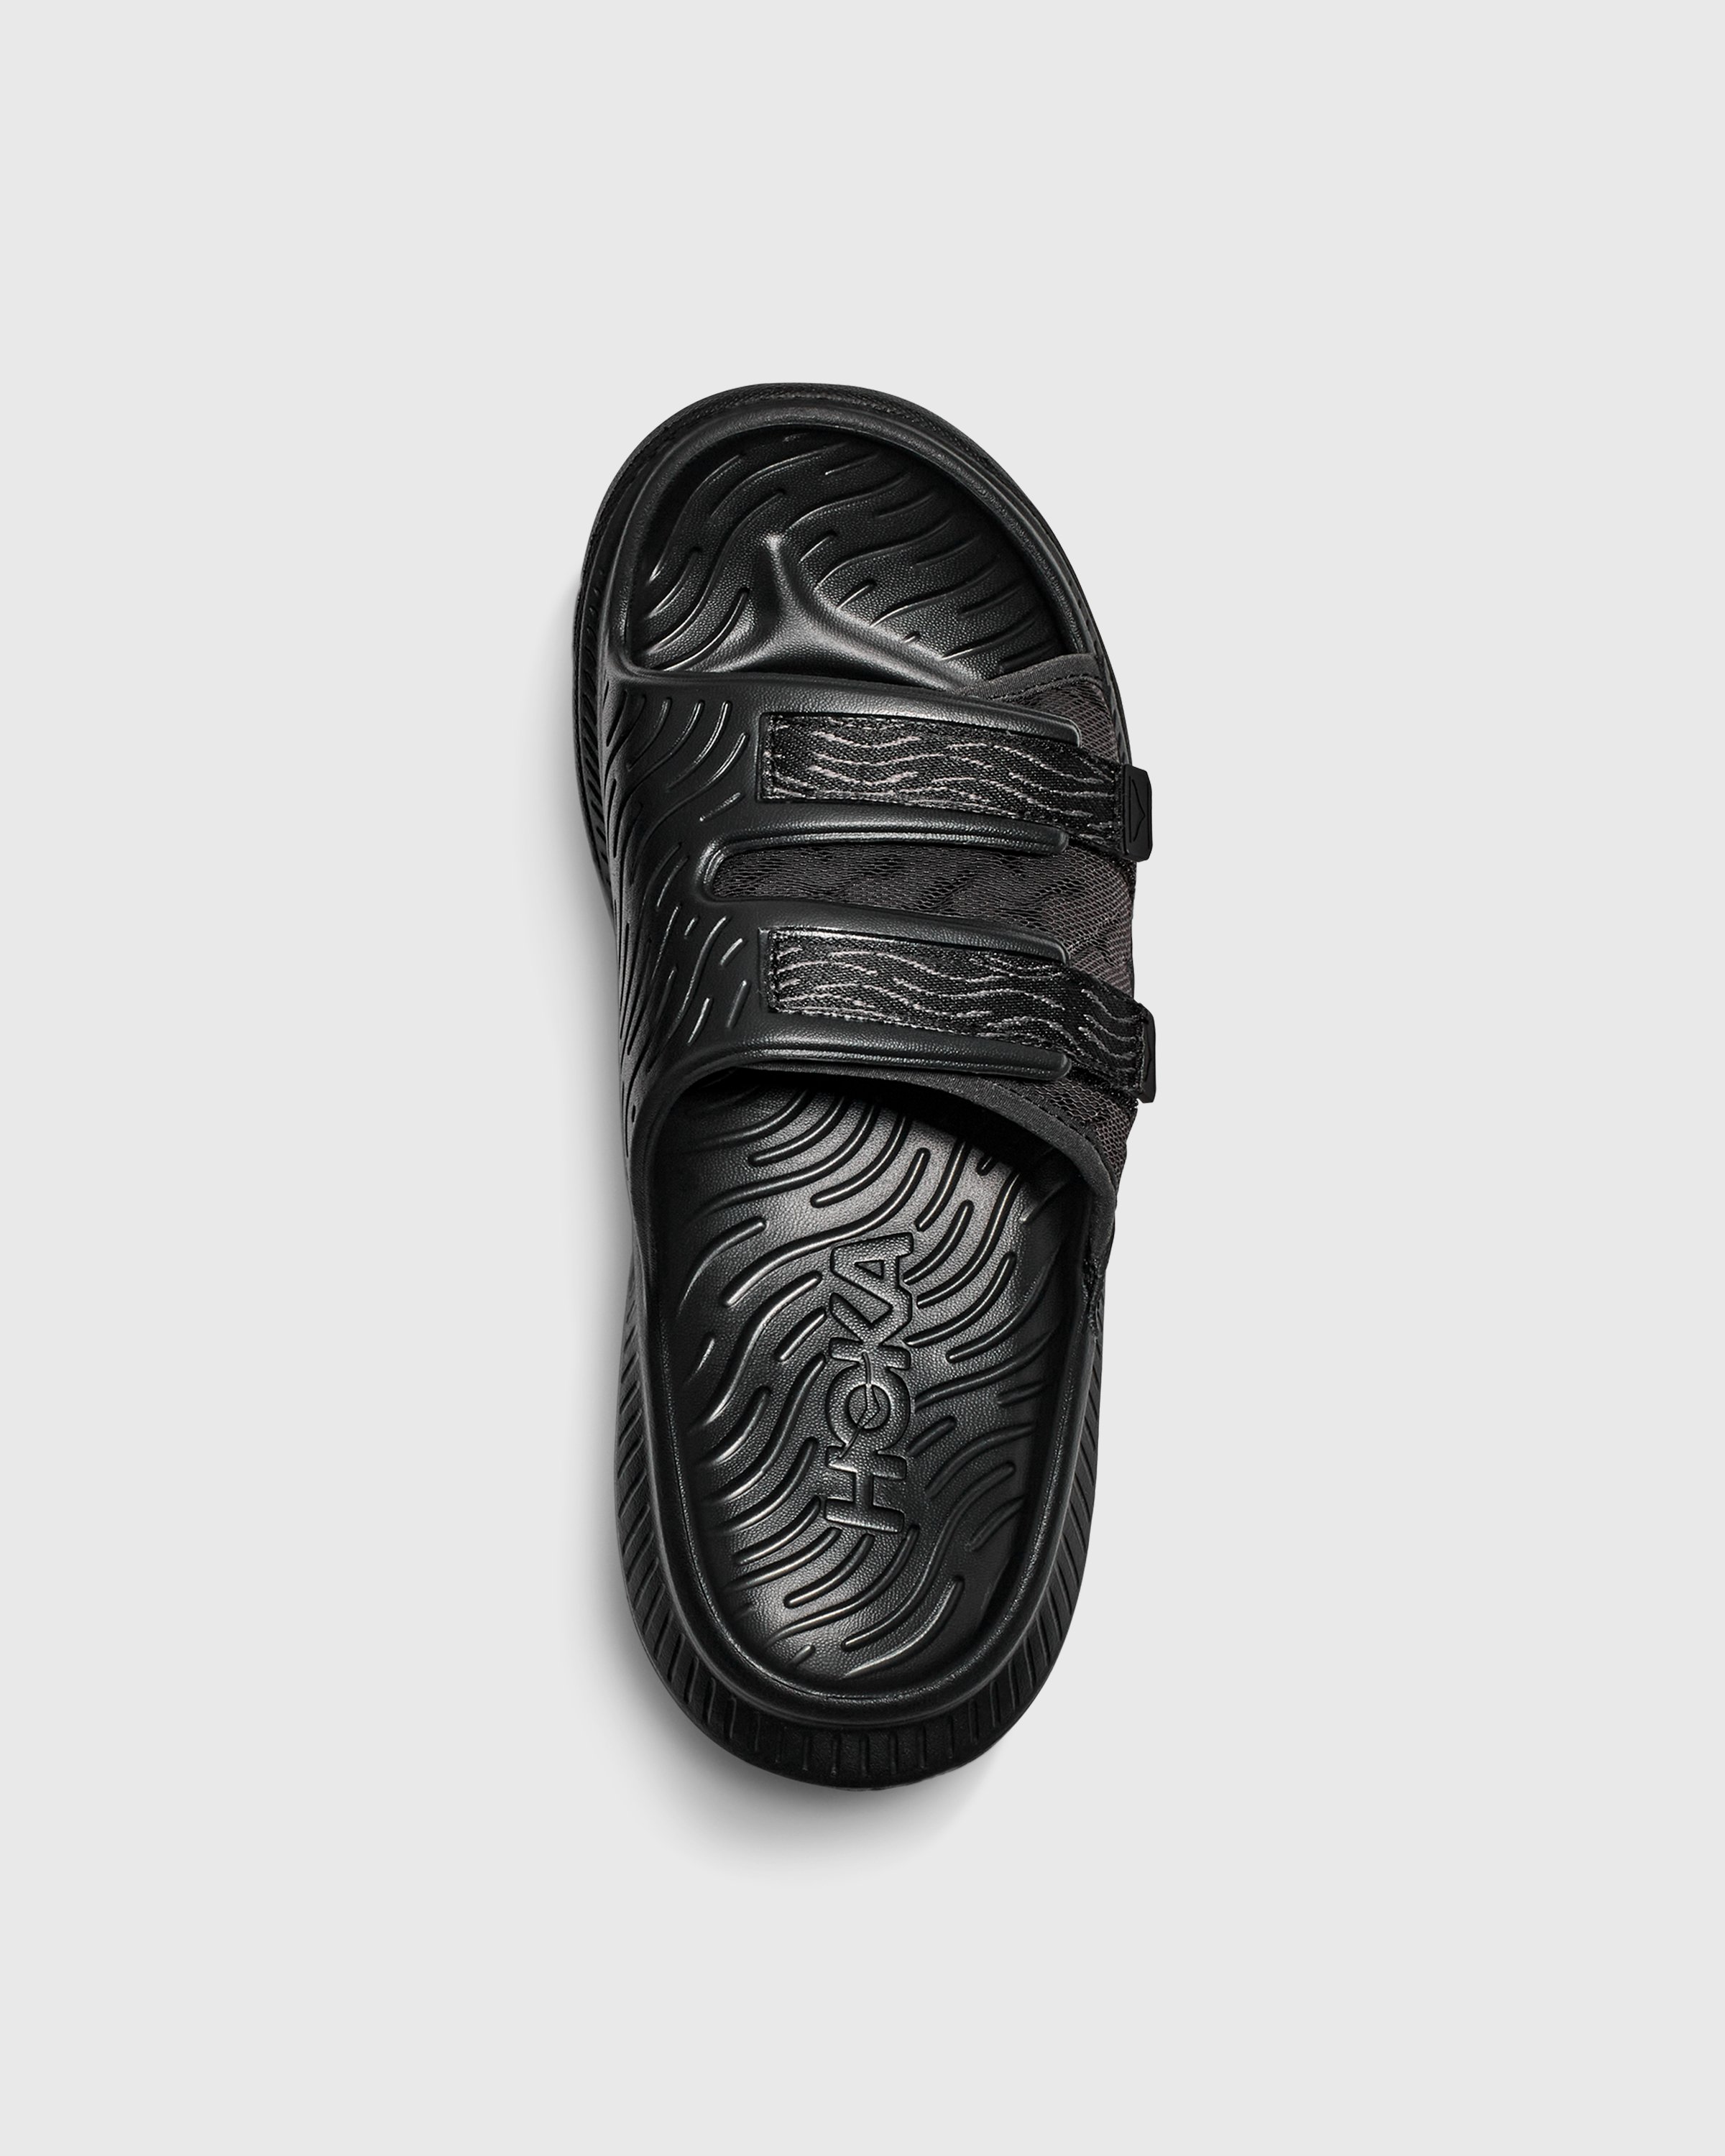 HOKA - ORA LUXE - Footwear - Black - Image 3